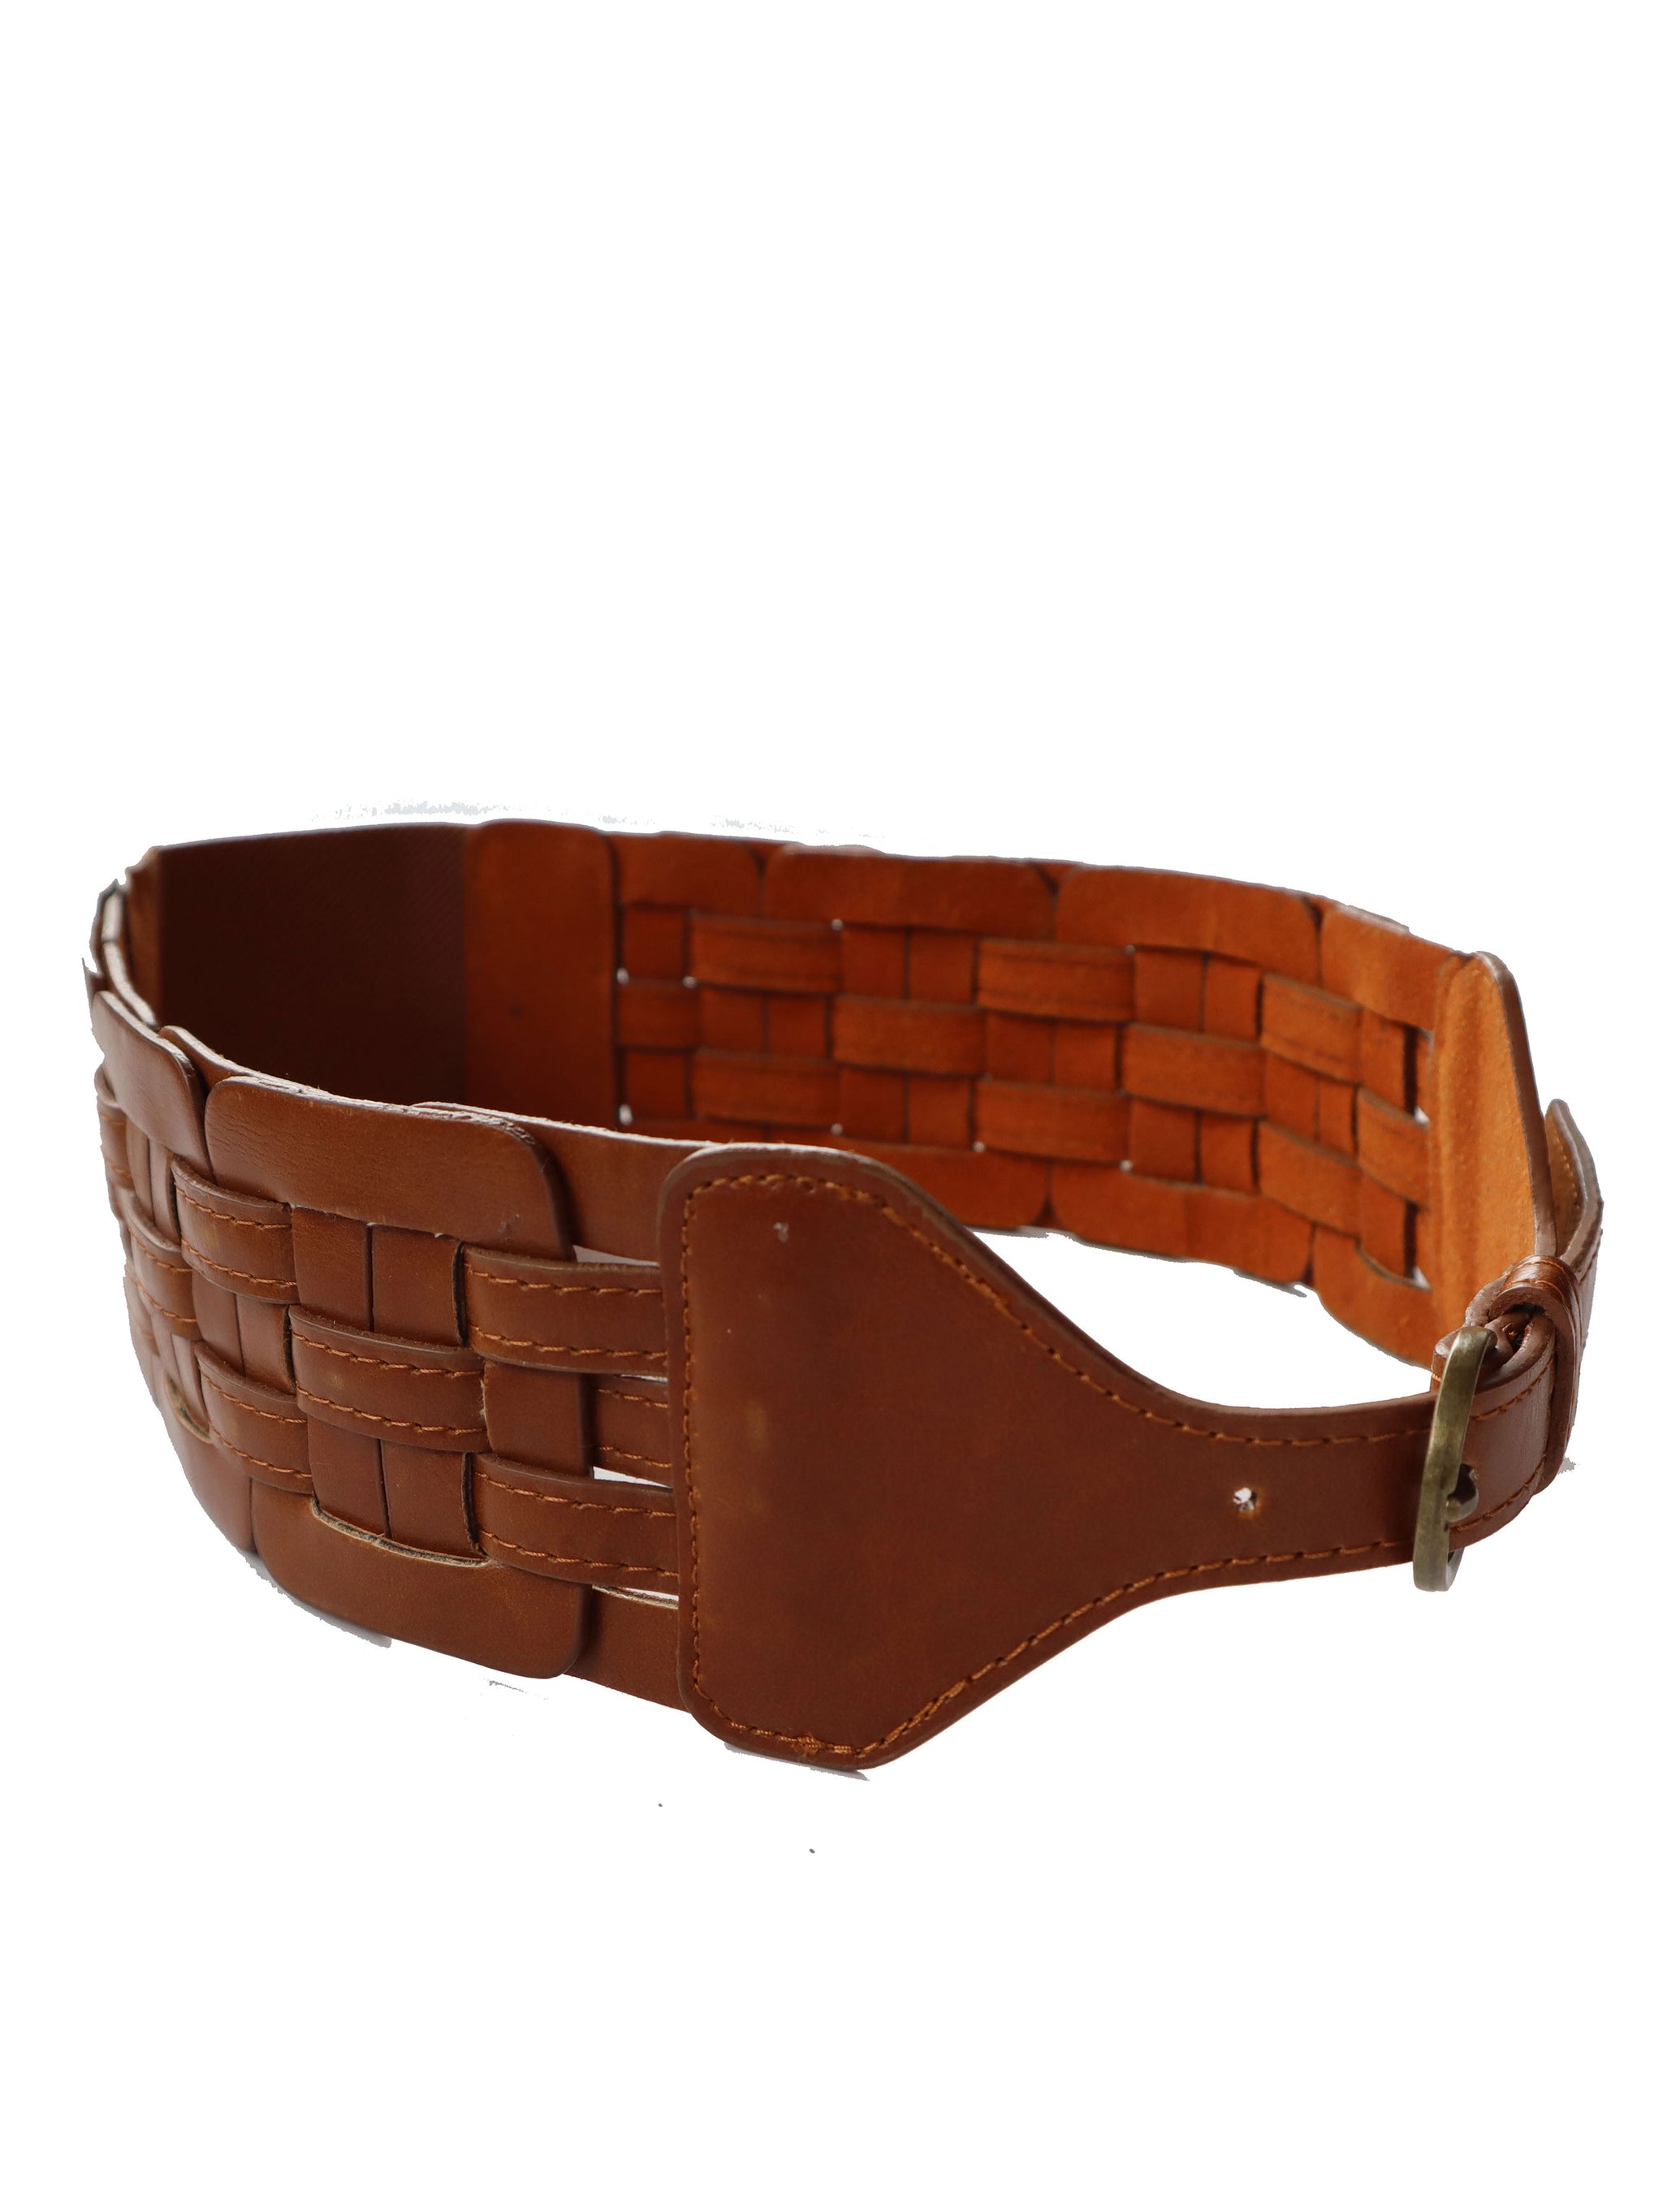 Vintage Leather Cinch Belt w/ Elastic